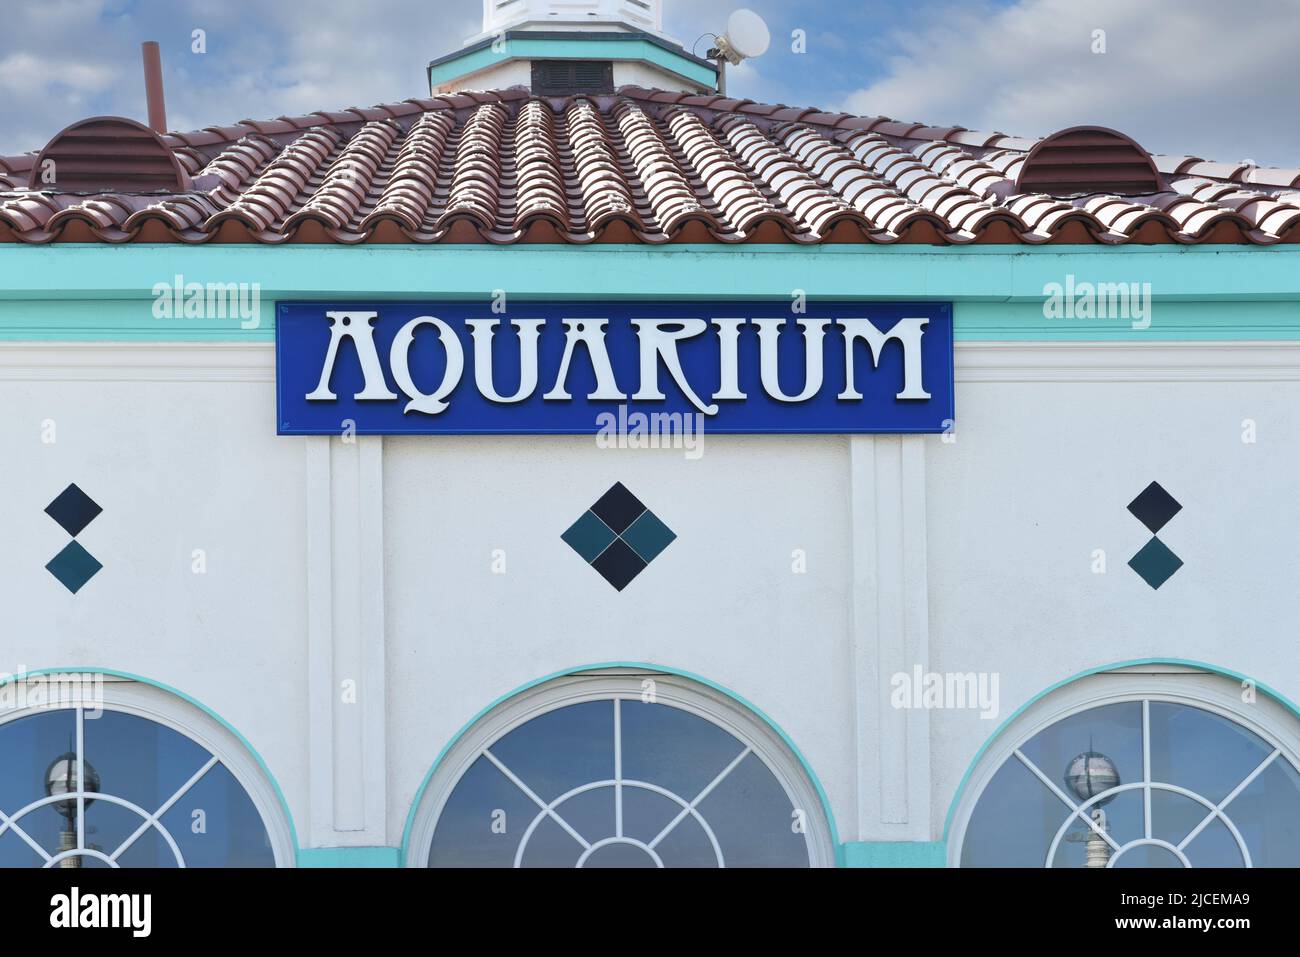 MANHATTAN BEACH, CALIFORNIA - 17 FEB 2020: Sign on the Roundhouse Aquarium Teaching Center on the Manhattan Beach Pier. Stock Photo